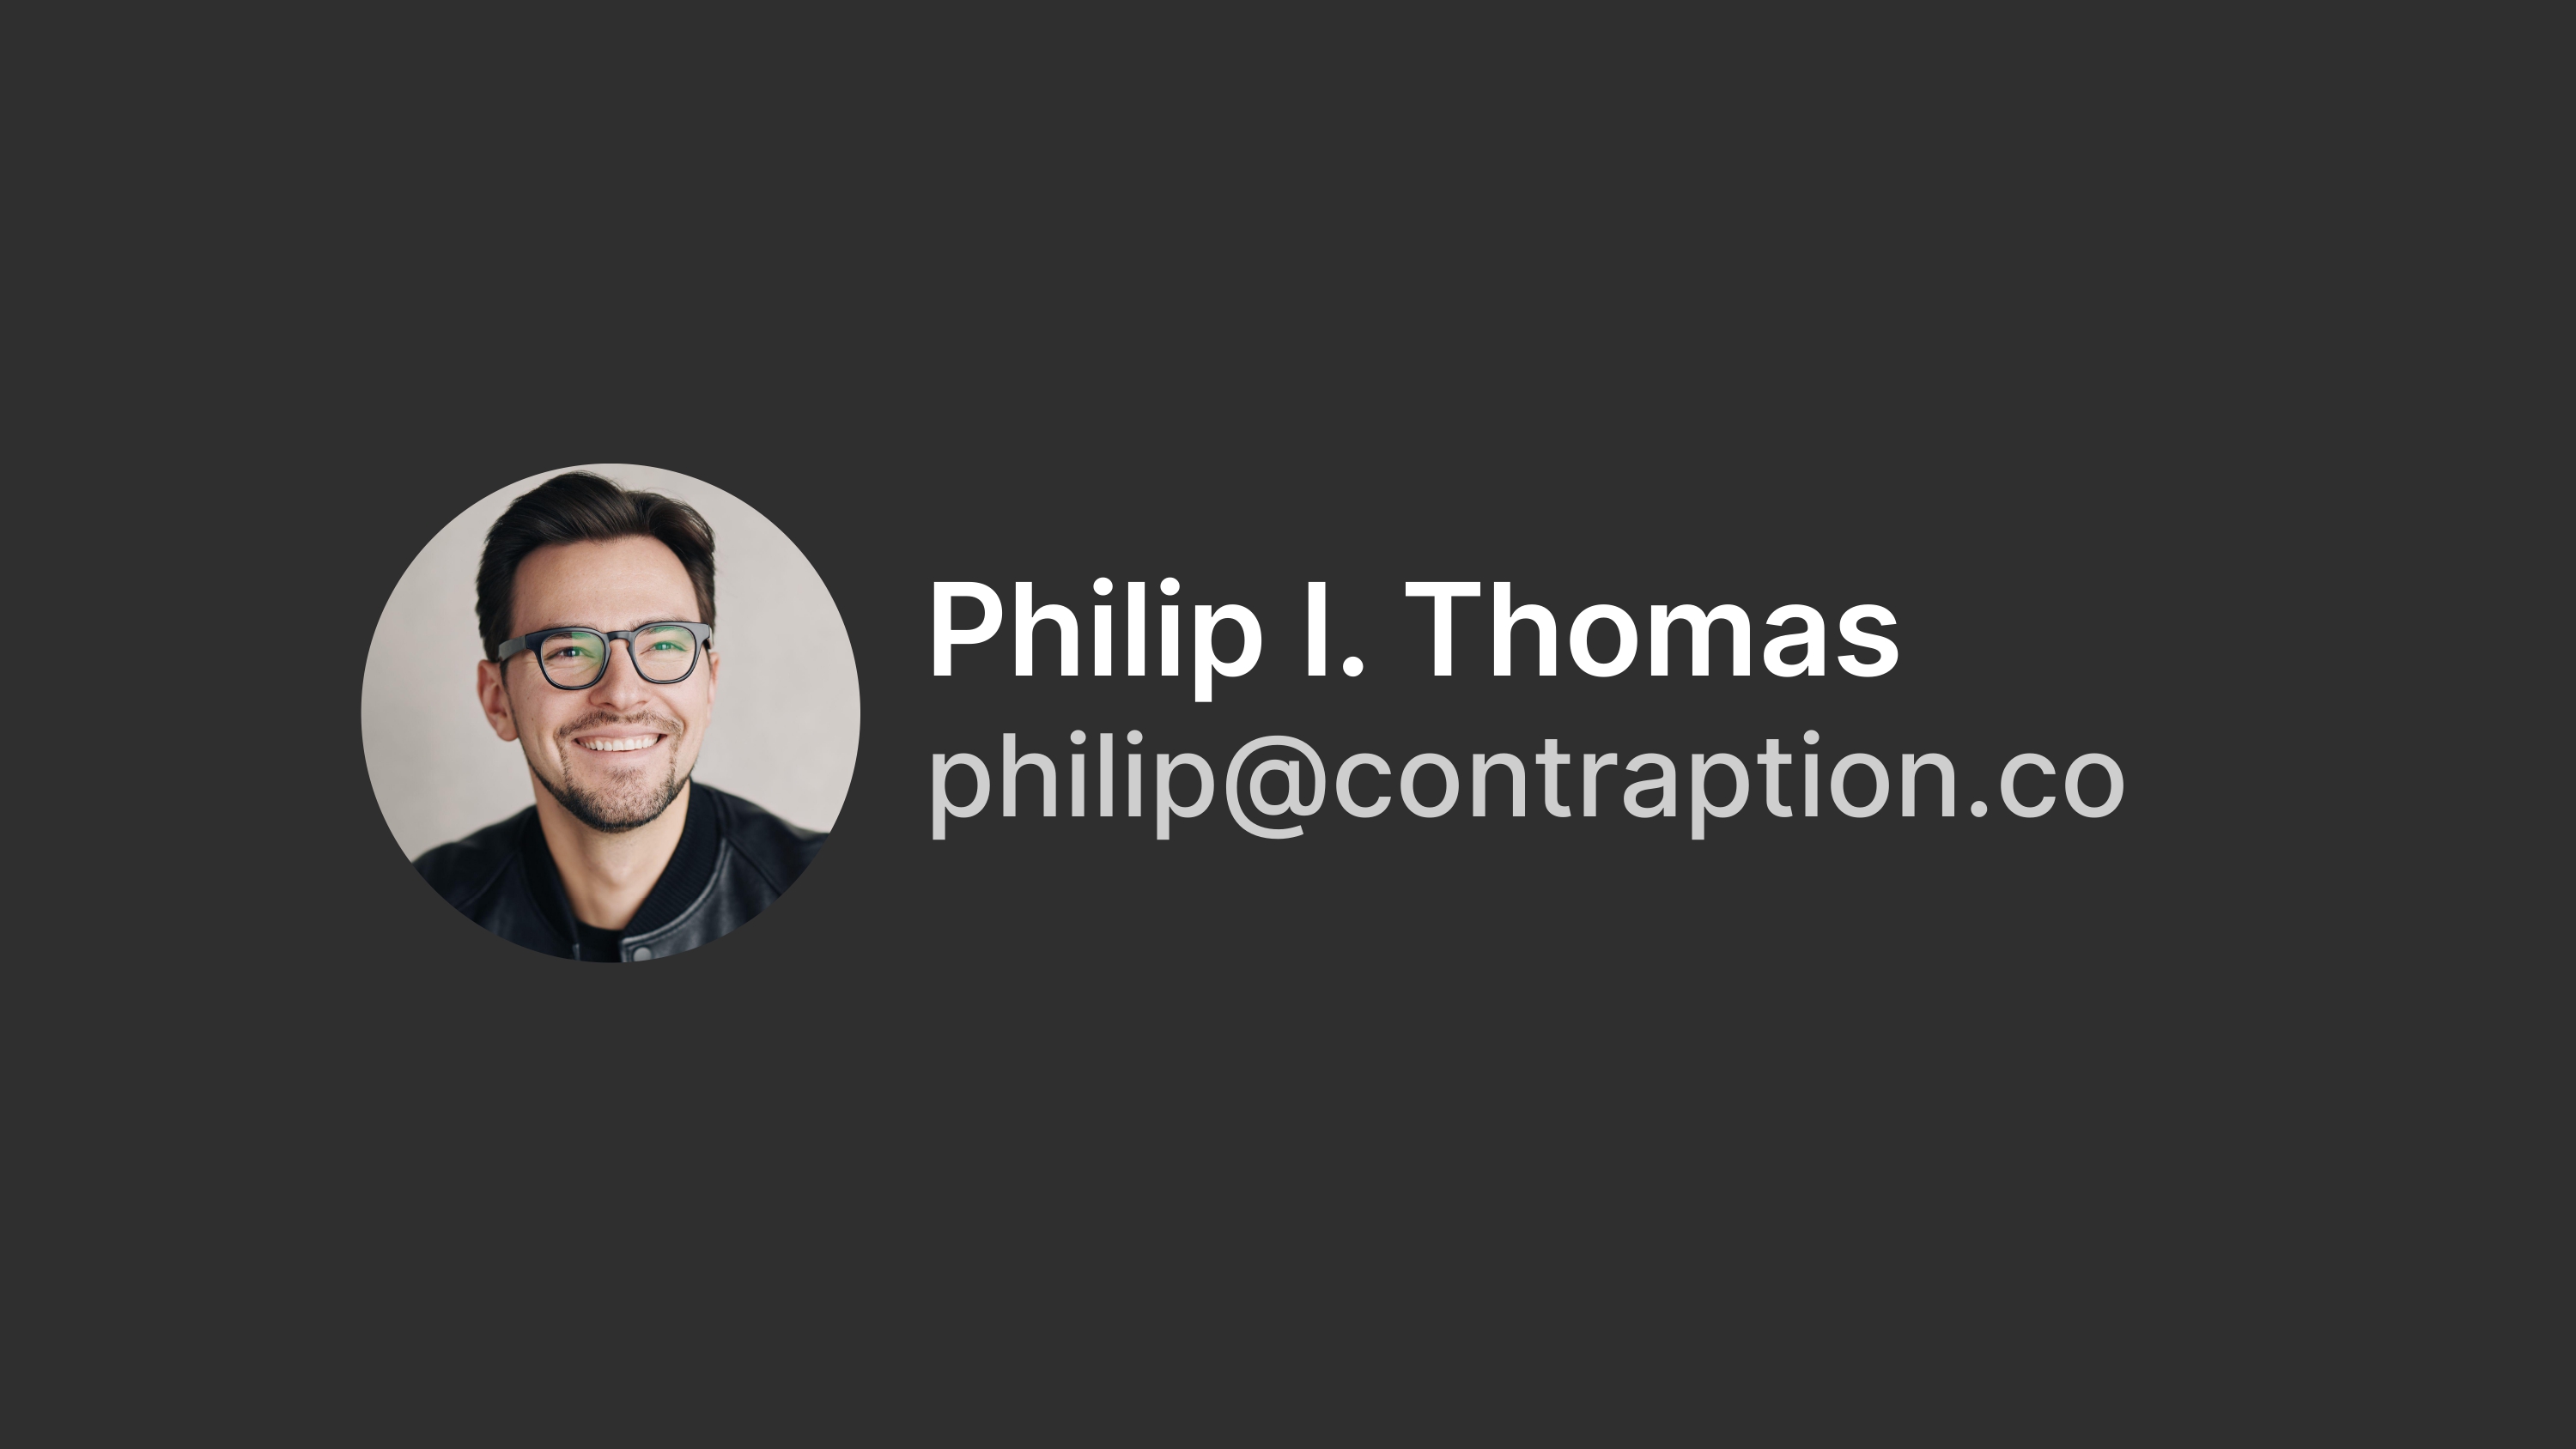 About me - Philip I. Thomas